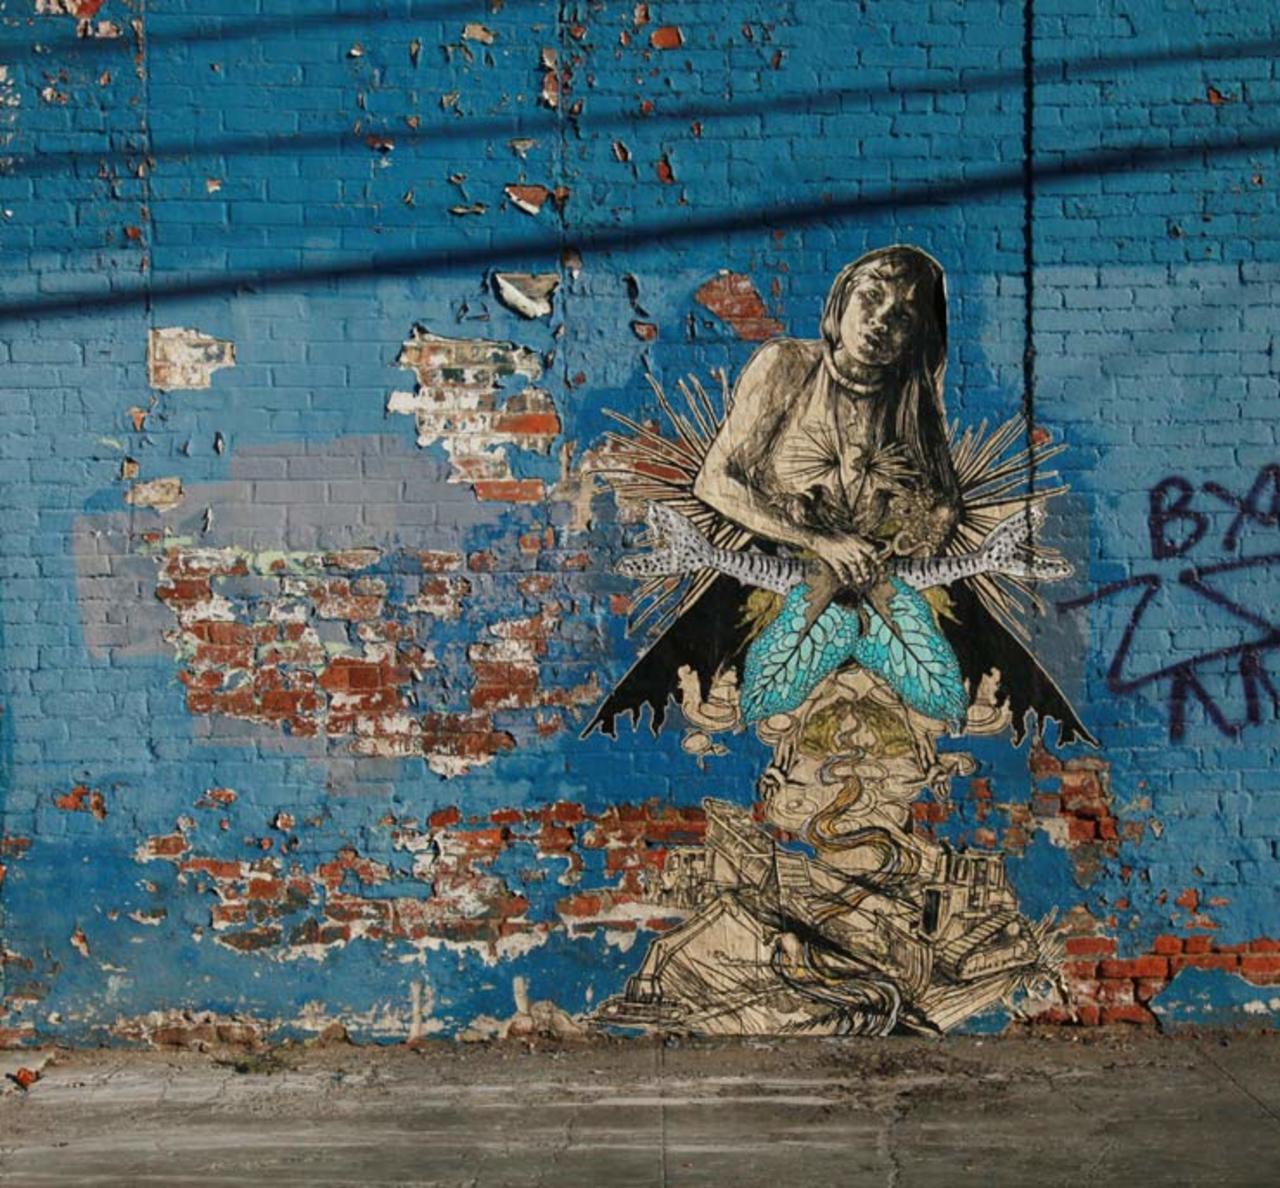 RT @city_z3n_0wl: BSA | New SWOON Storytelling on Battered Brooklyn Walls
http://www.brooklynstreetart.com/theblog/2015/10/26/new-swoon-storytelling-on-battered-brooklyn-walls/
#streetart #urbanart #graffiti https://t.co/kwGCzDrUmp